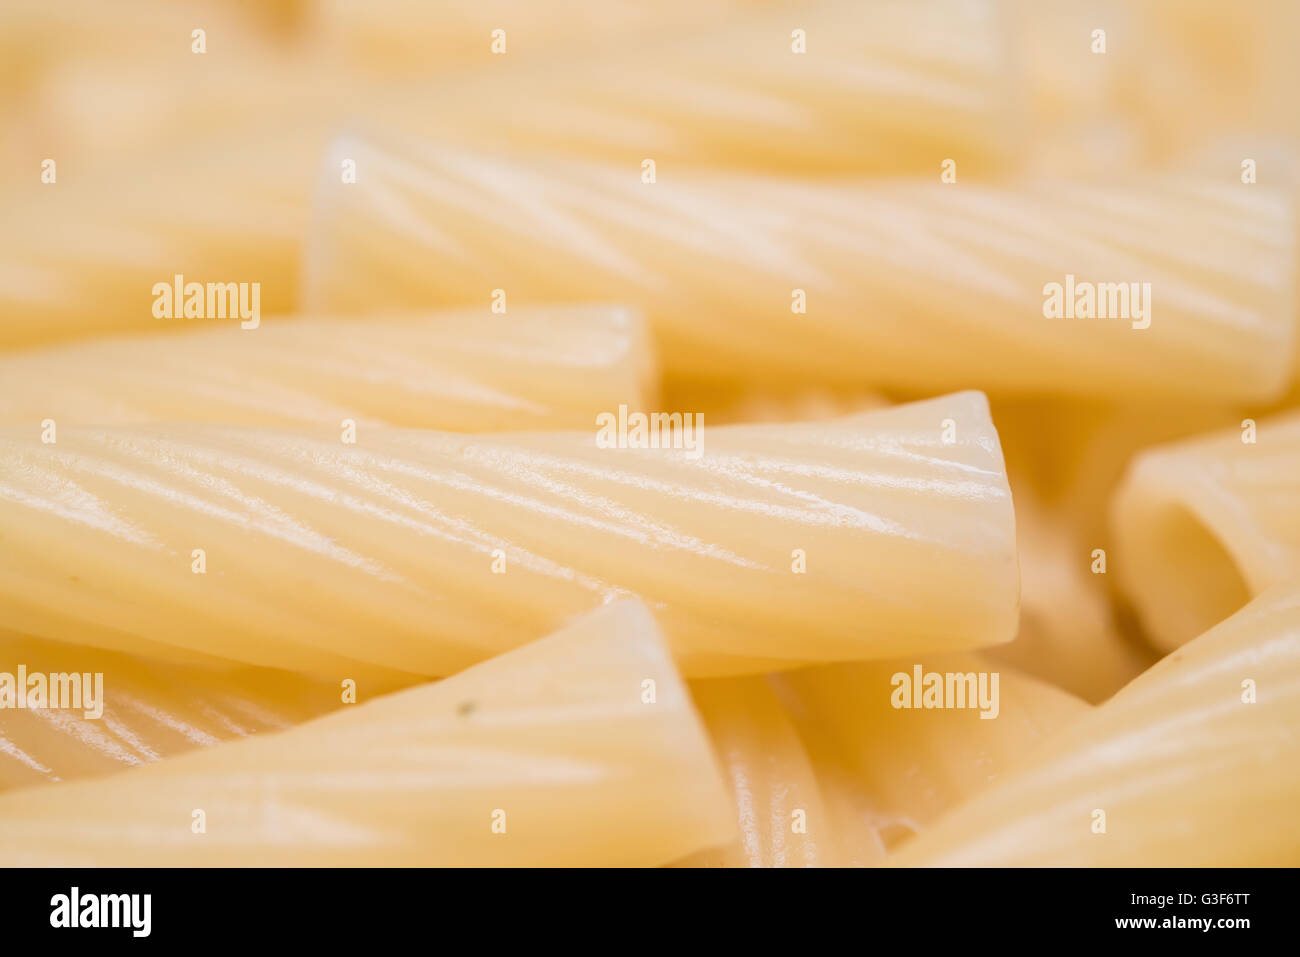 frischer italienische Pasta mit Käsesauce hautnah Stockfoto